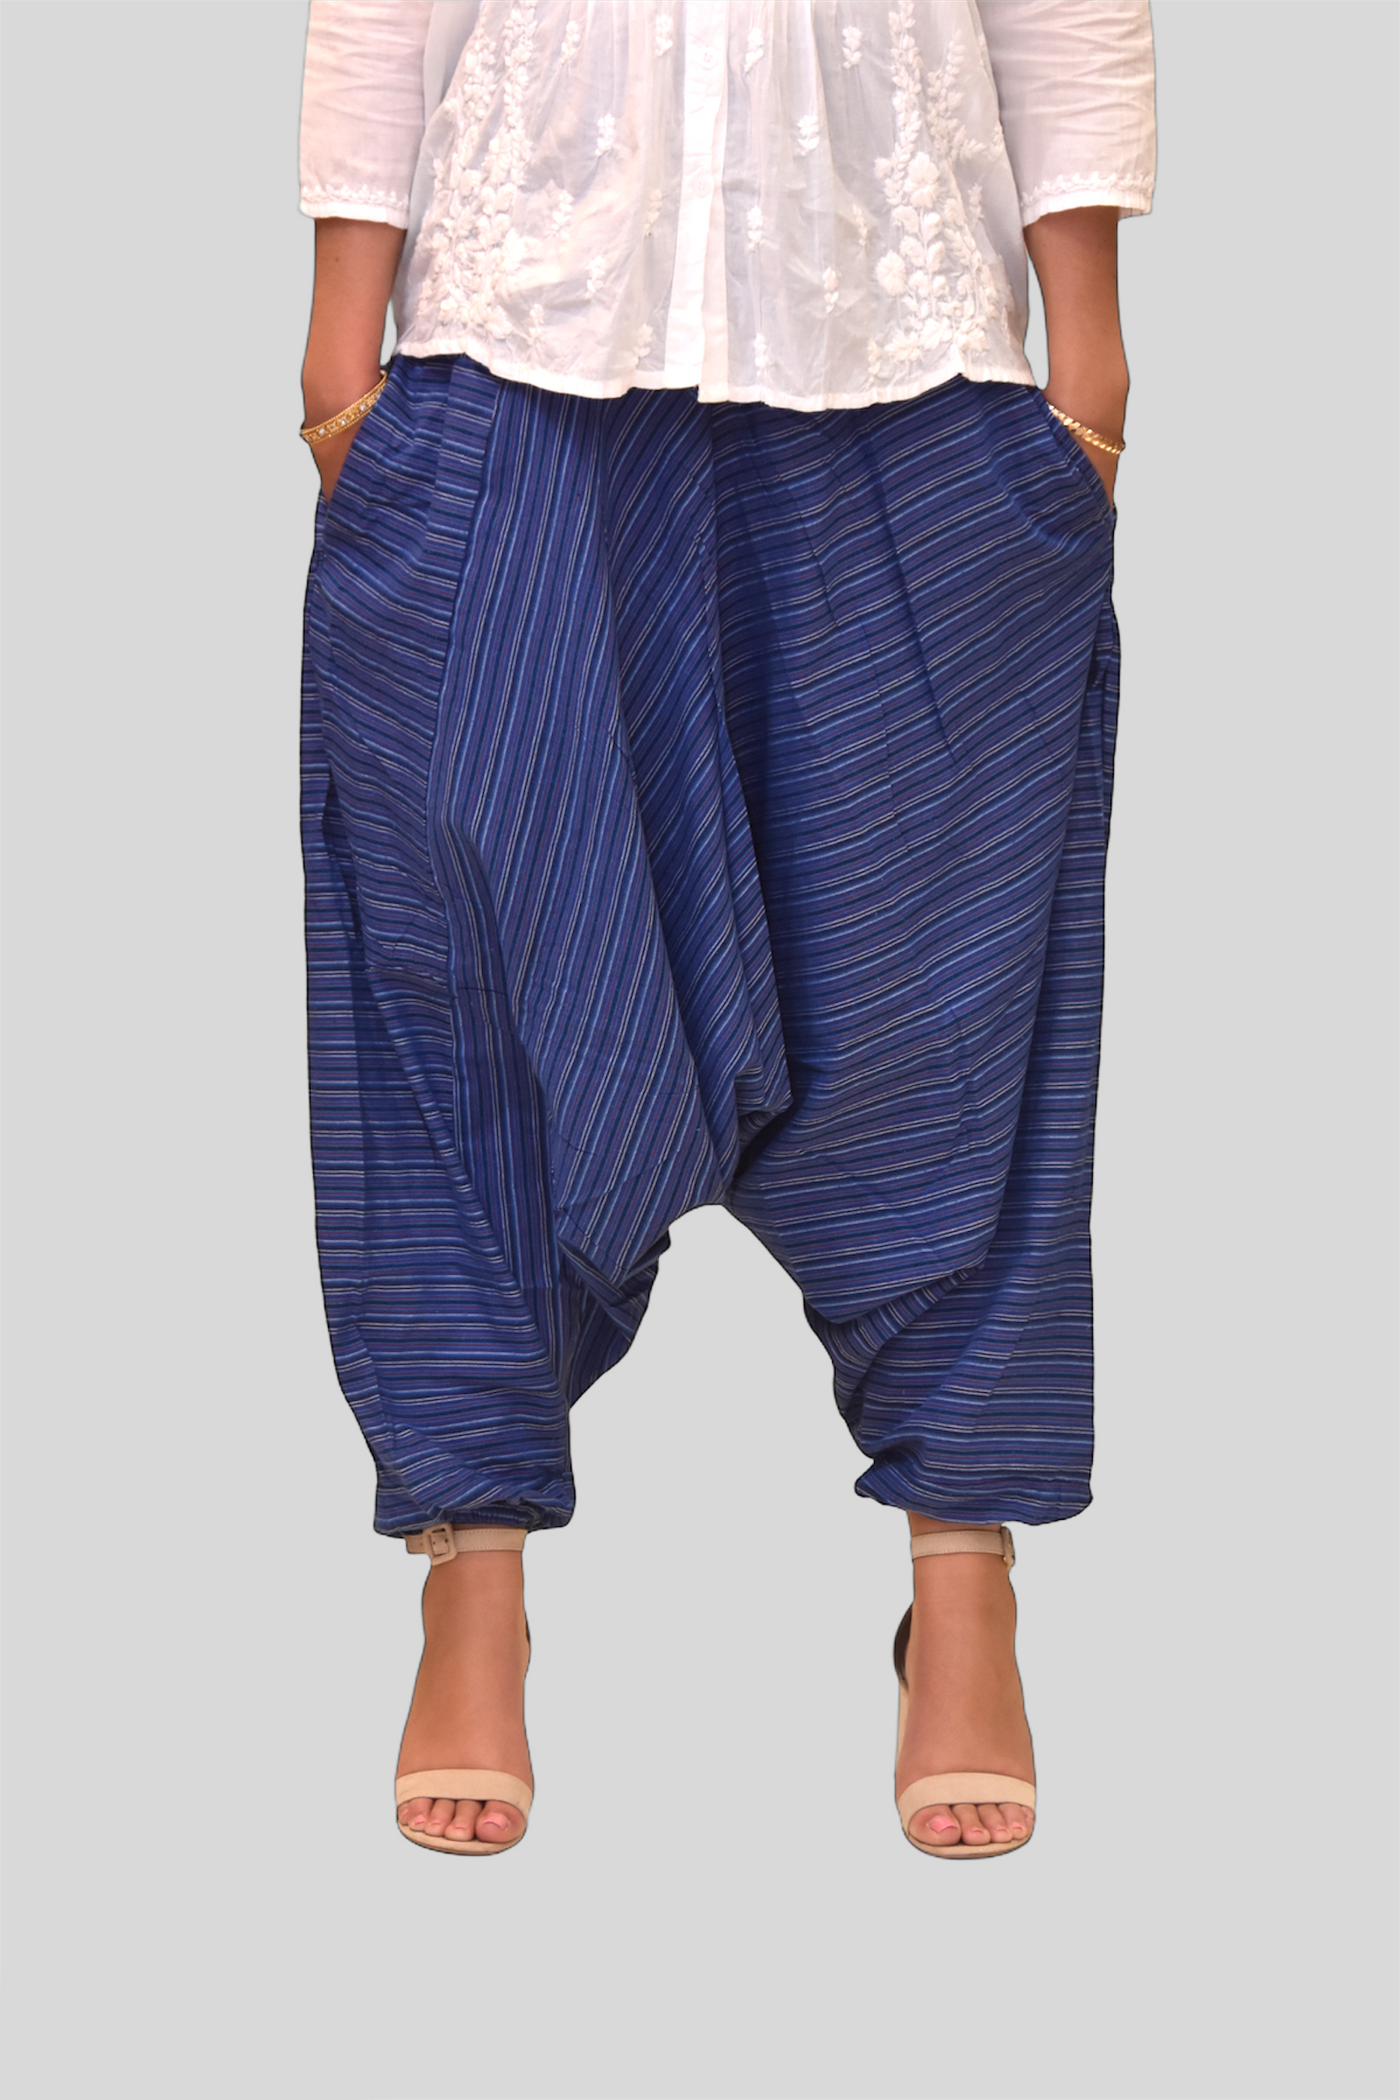 Indian Men Women Stylish Jalebi Print Trousers Baggy Gypsy Harem Yoga Pants  | eBay